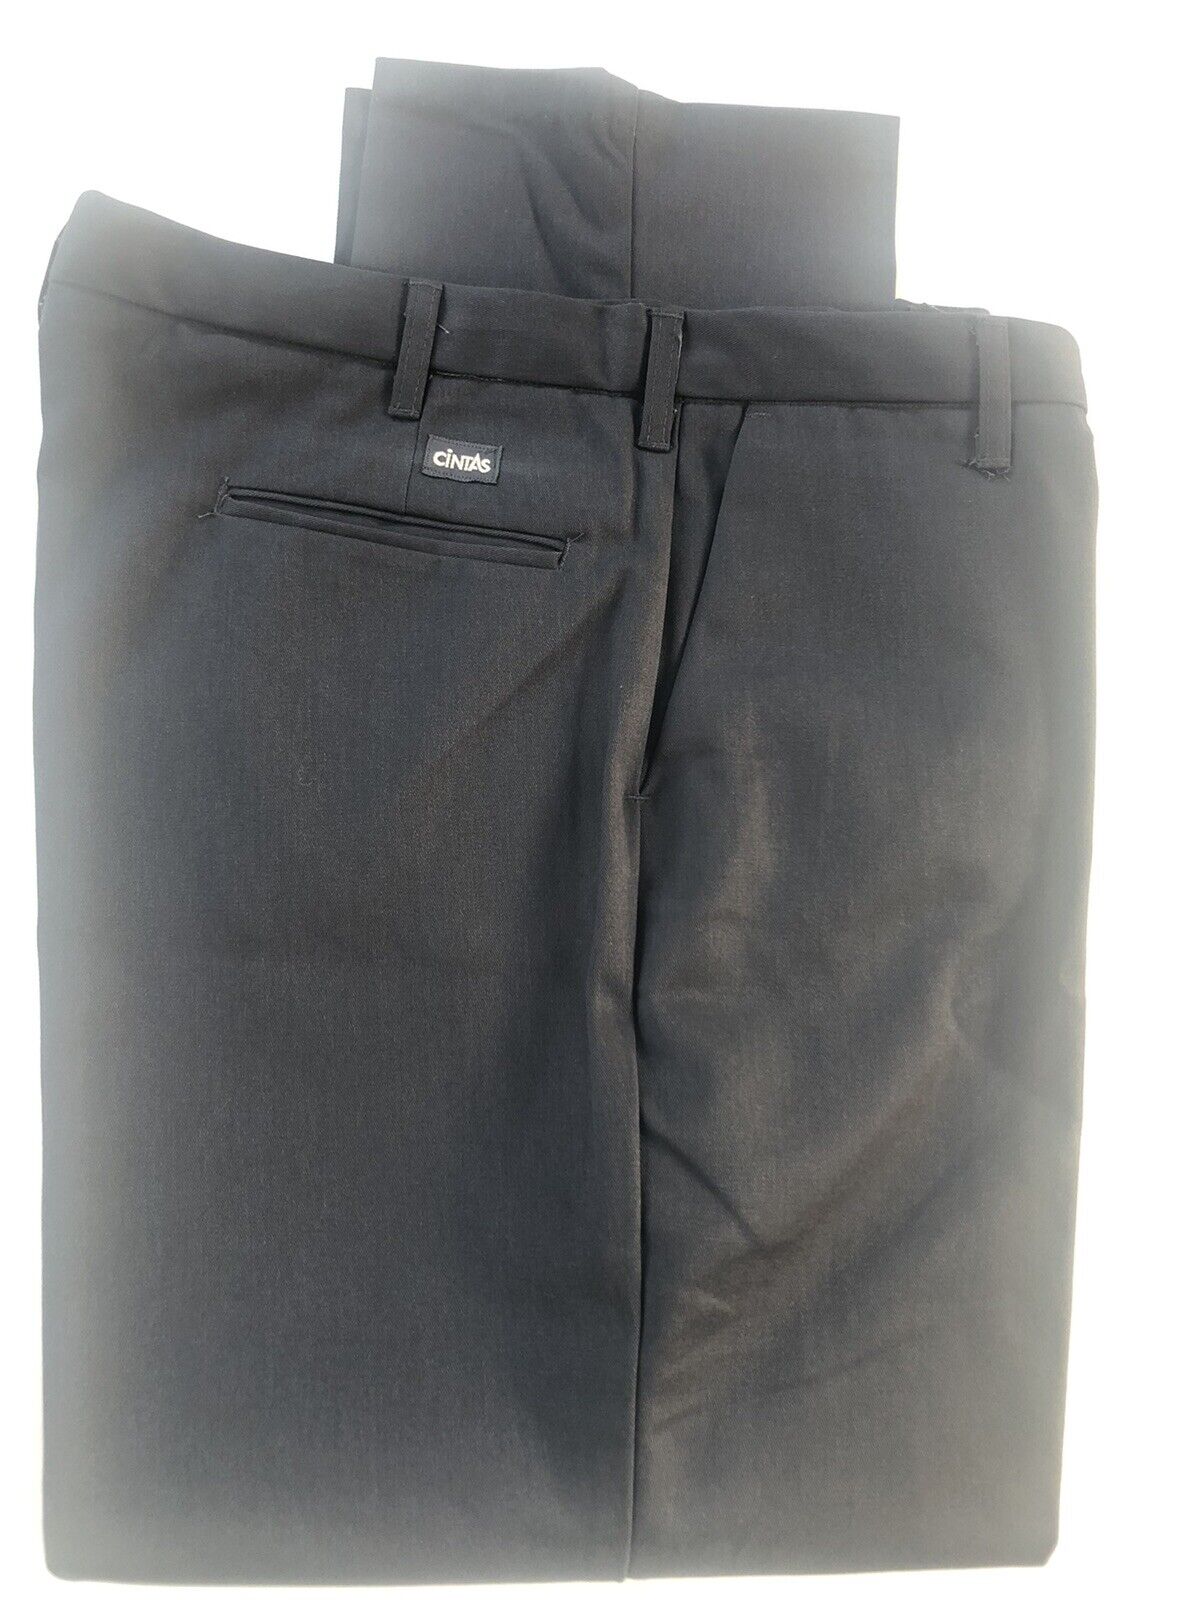 3 Cintas Comfort Flex Charcoal  Gray Work Pants Size 36x30 #945-33 cintas Does Not Apply